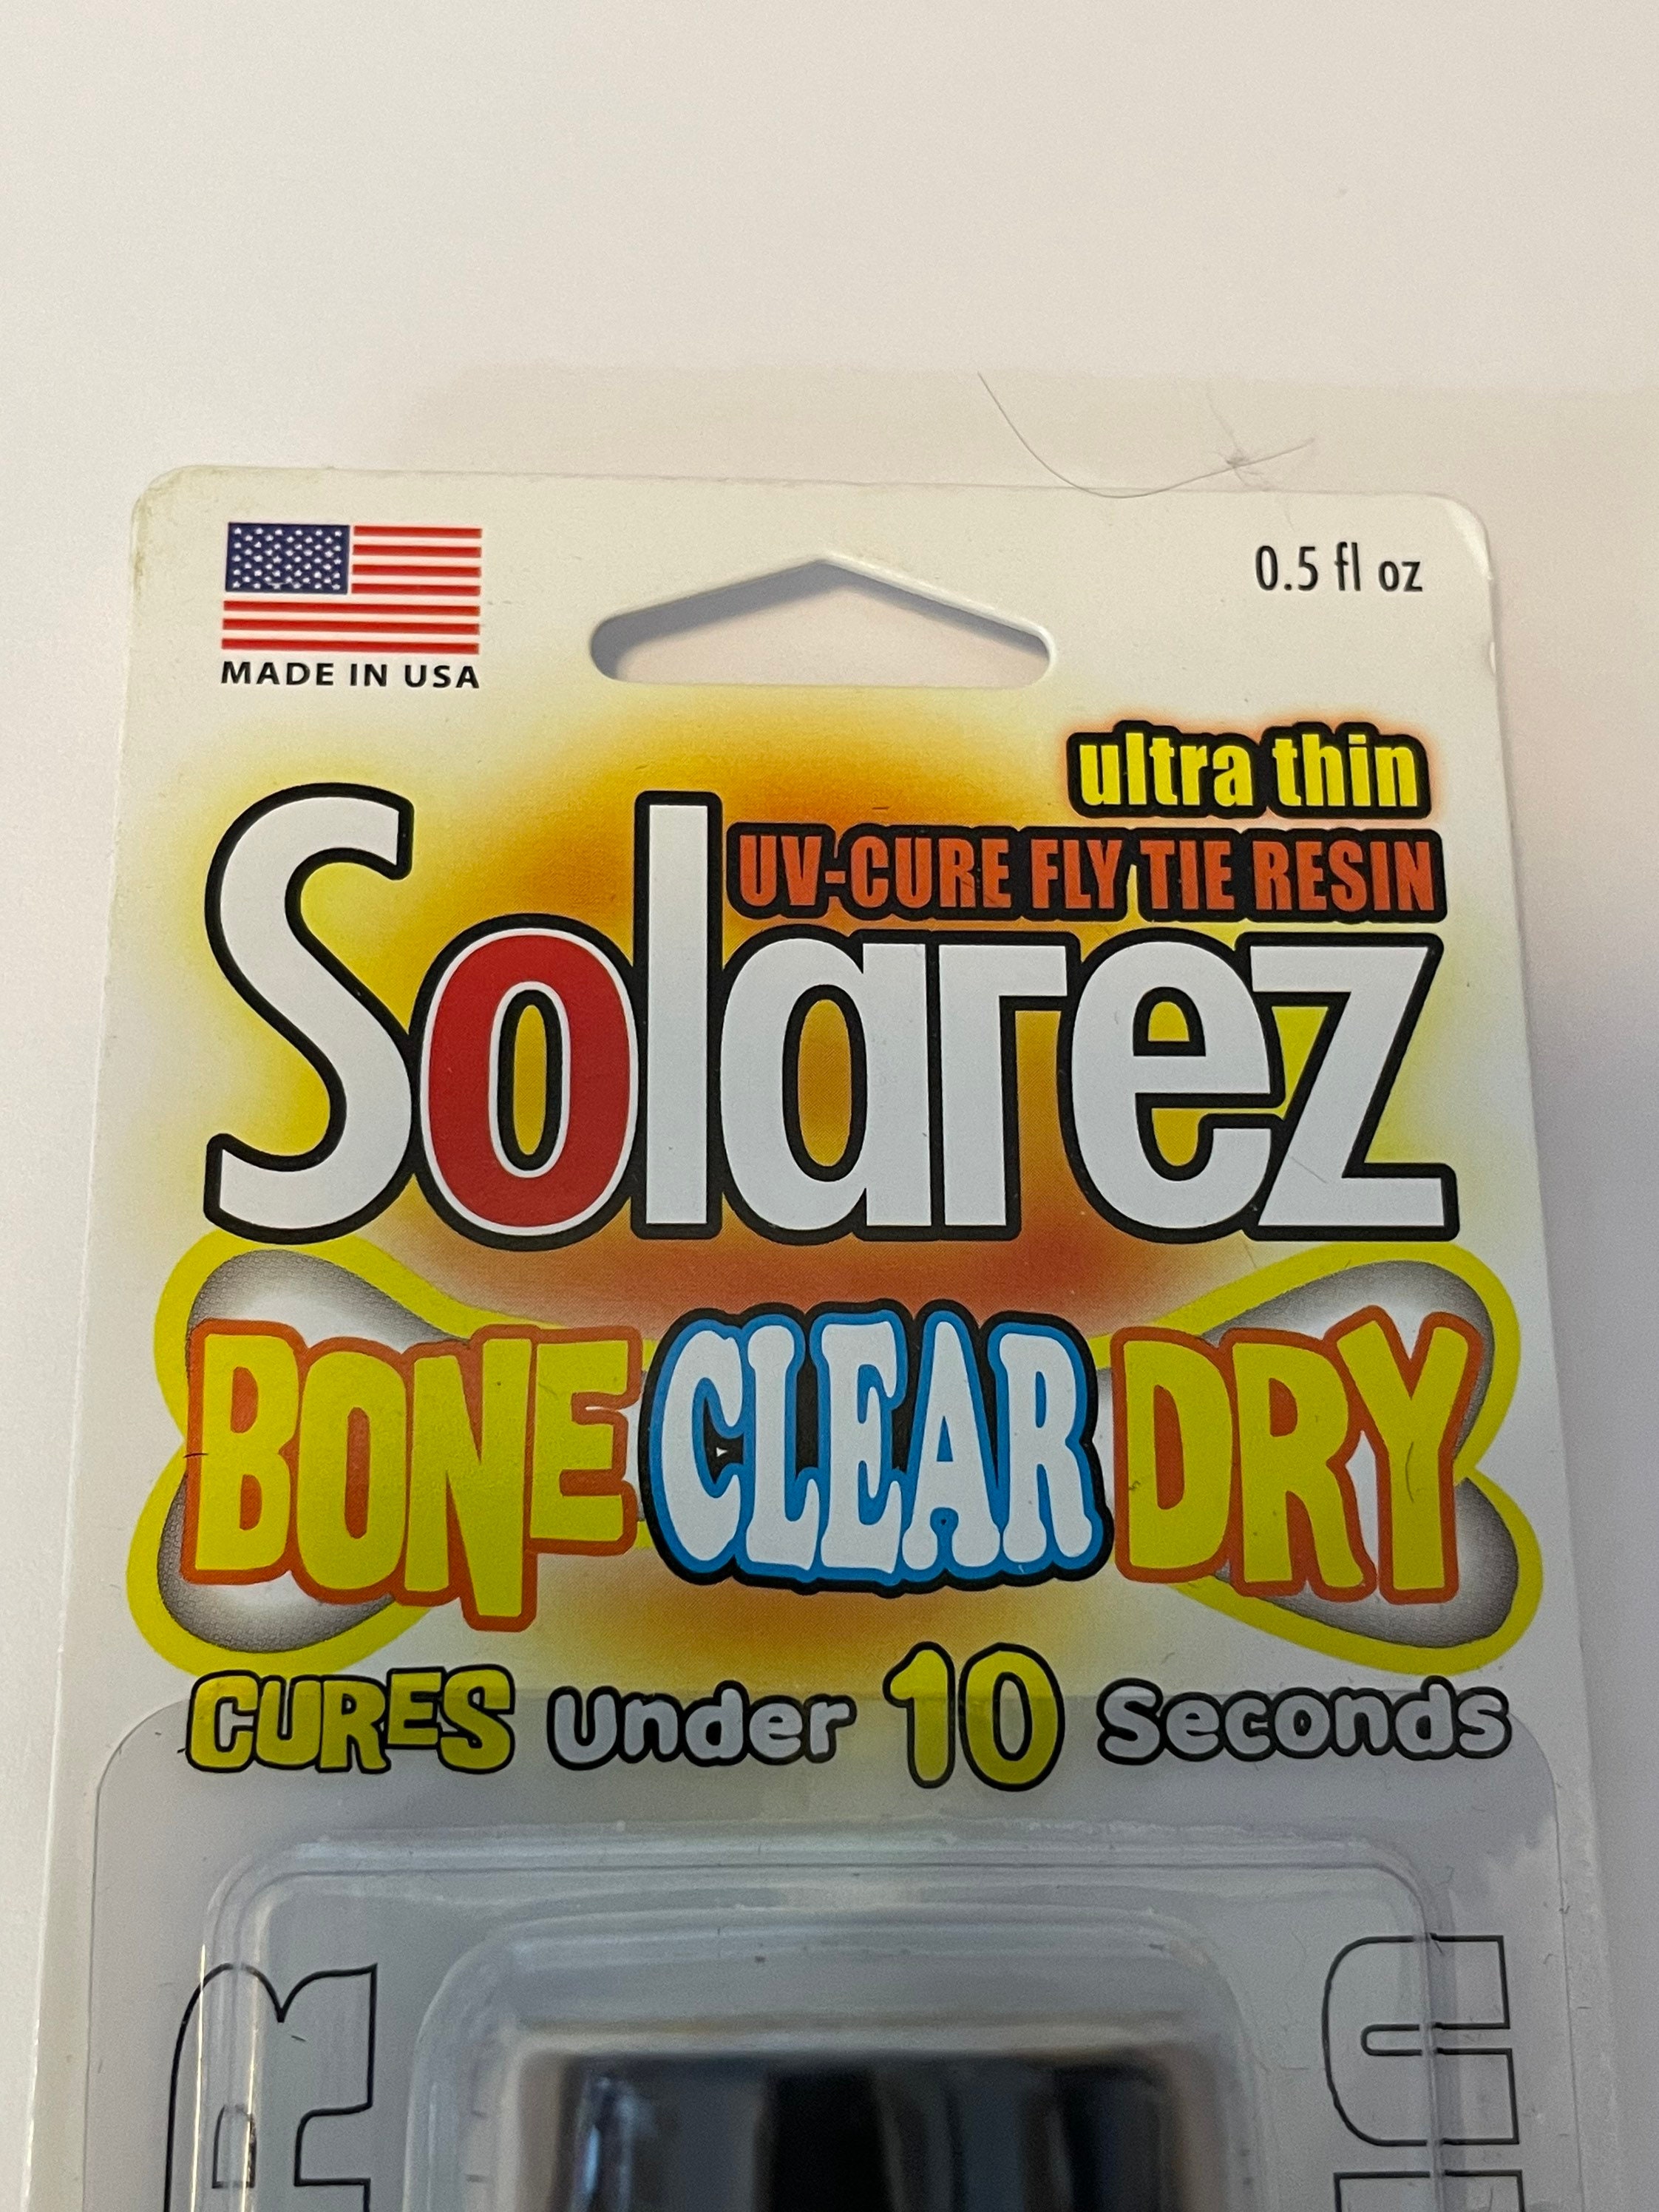 Solarez Bone Dry Ultra Thin Black